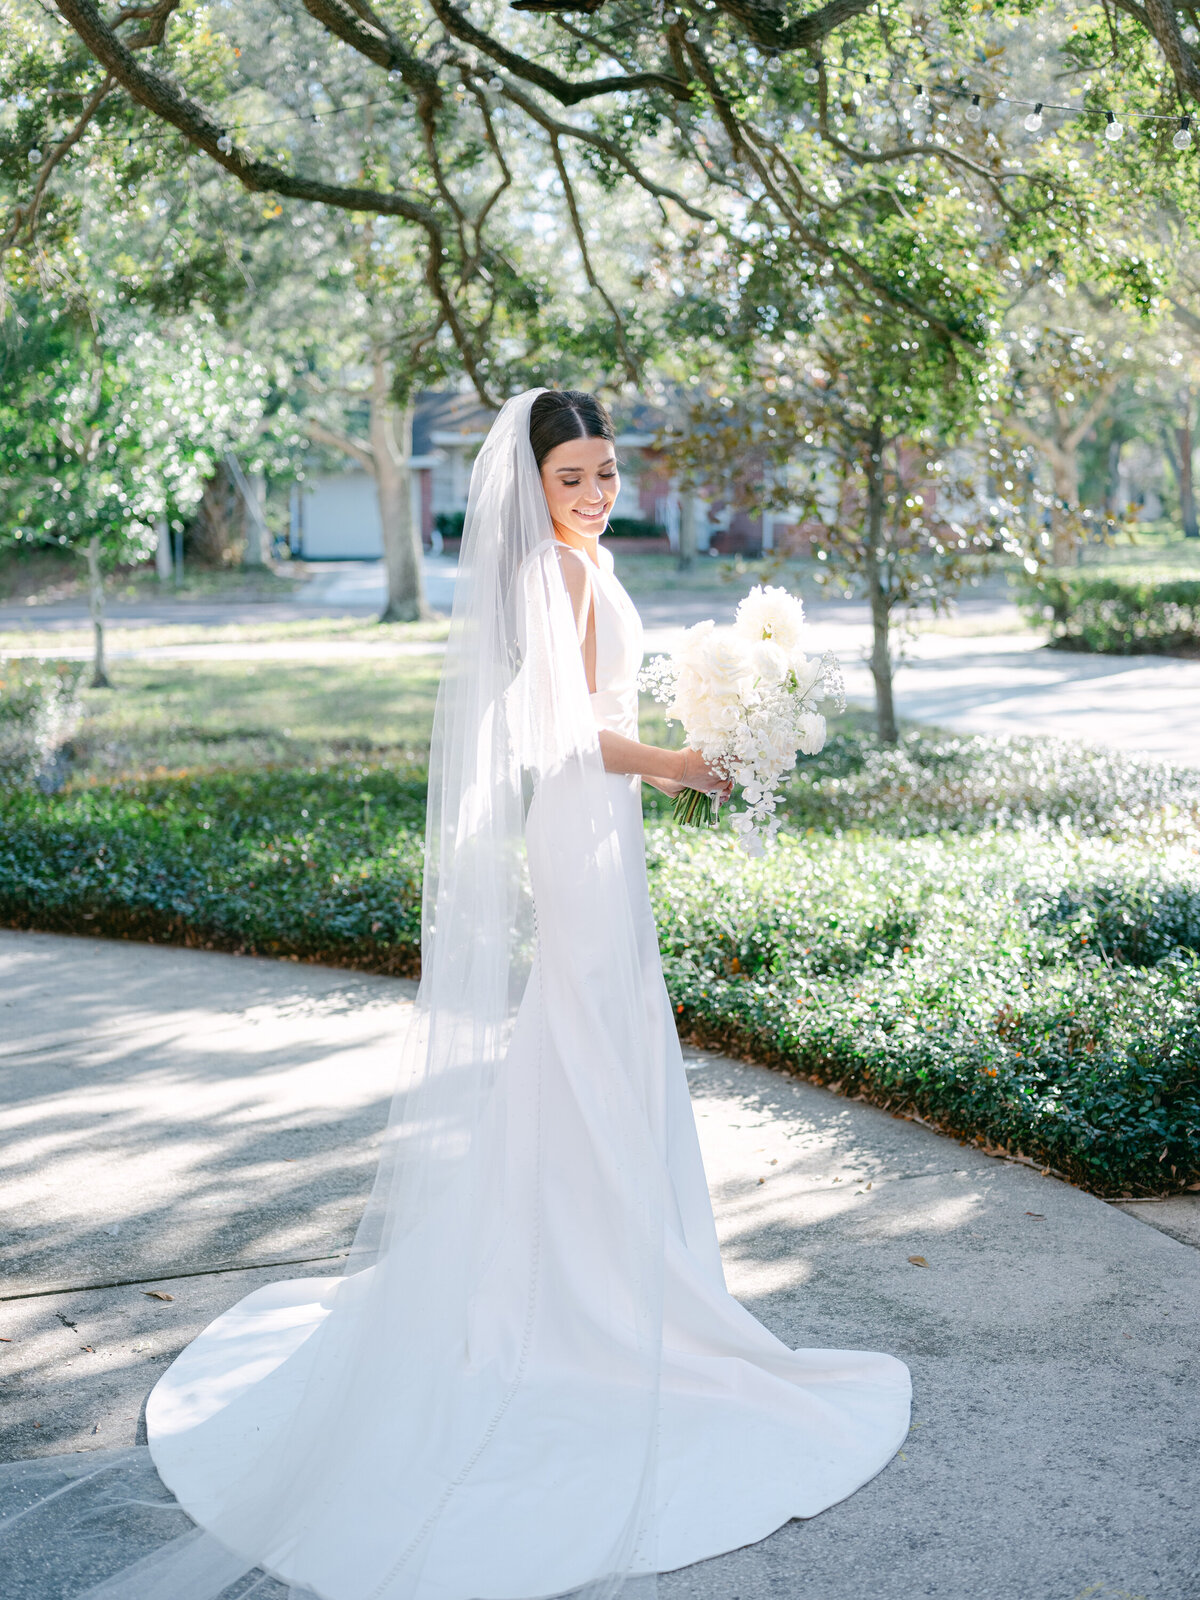 Kristen Weaver Photography Orlando Florida Destination Photographer Worldwide Wedding Editorial Fashion Inspired Clean Film KWP -0405